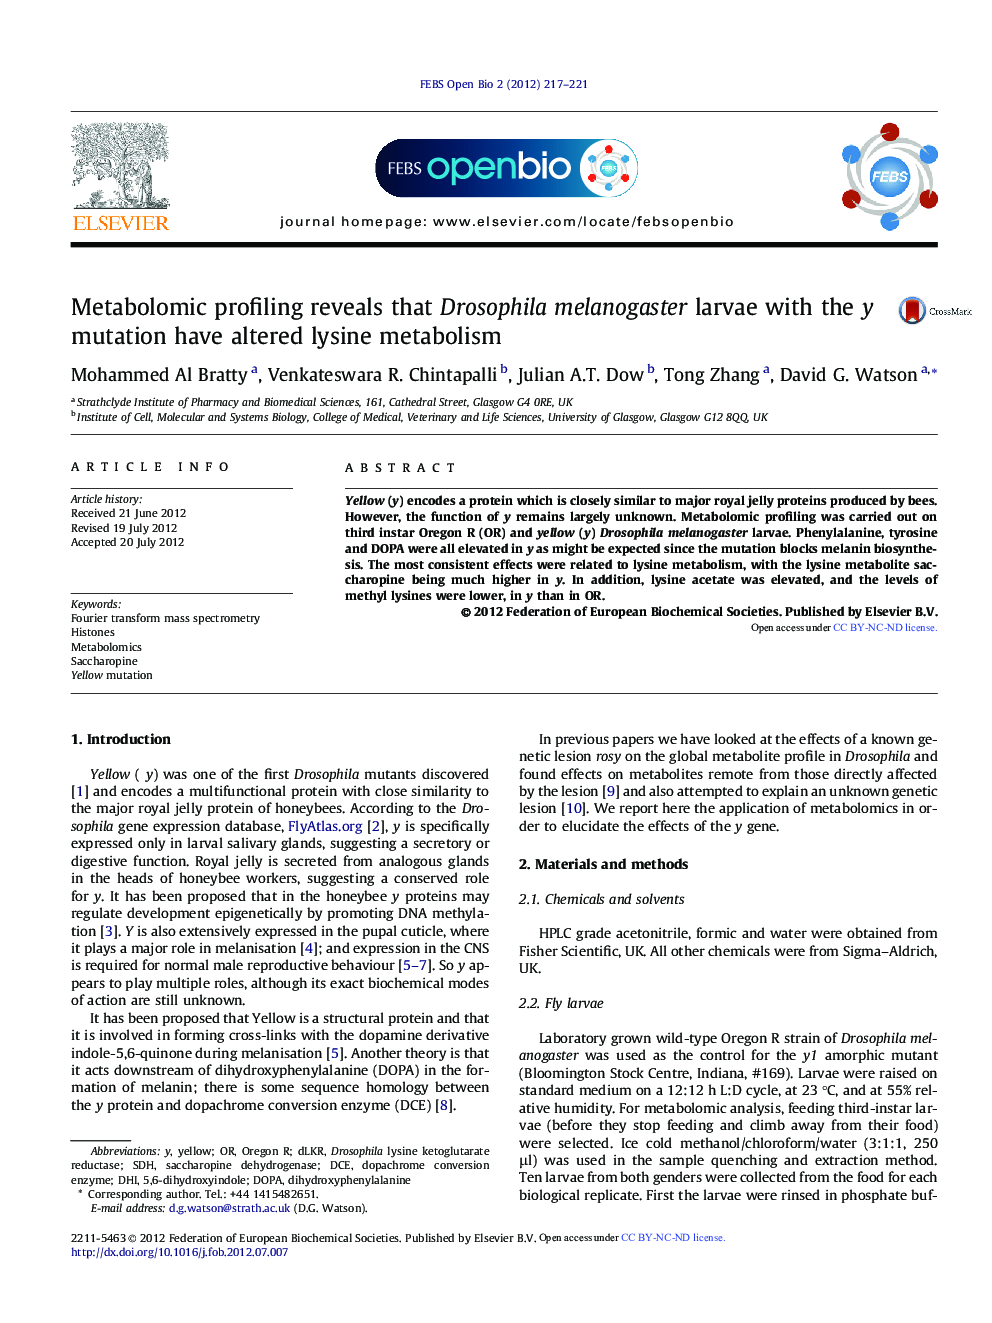 Metabolomic profiling reveals that Drosophila melanogaster larvae with the y mutation have altered lysine metabolism